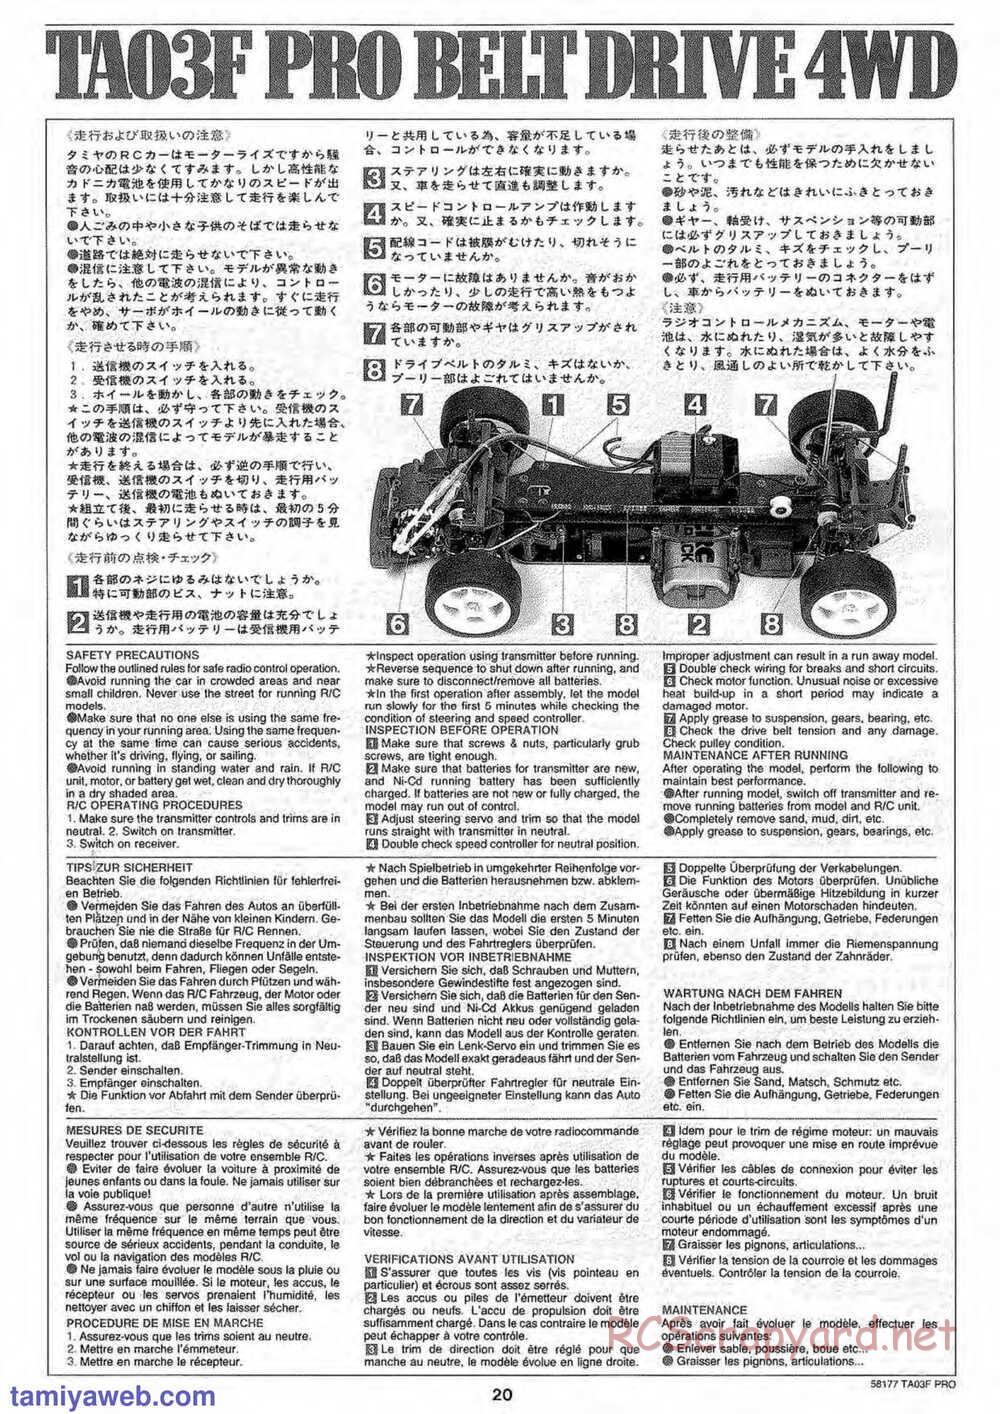 Tamiya - TA-03F Pro Chassis - Manual - Page 20